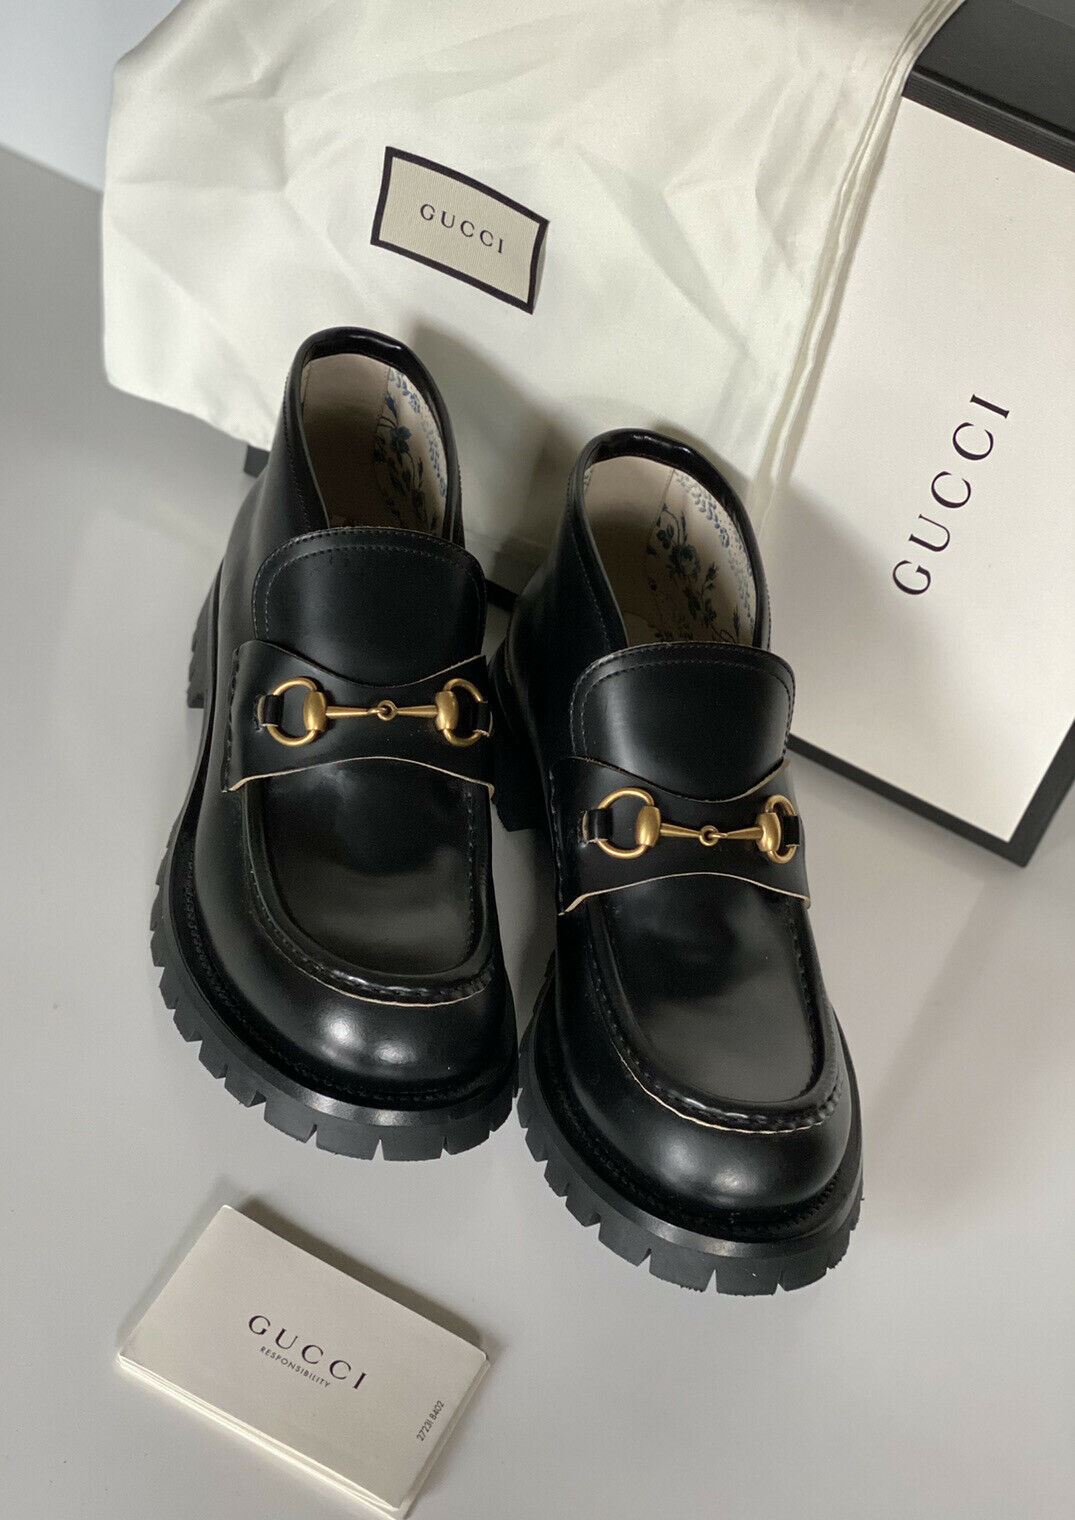 NIB $1750 Gucci Men Cordovan Leather Ankle Boots Black 11.5 US/11 UK 545280